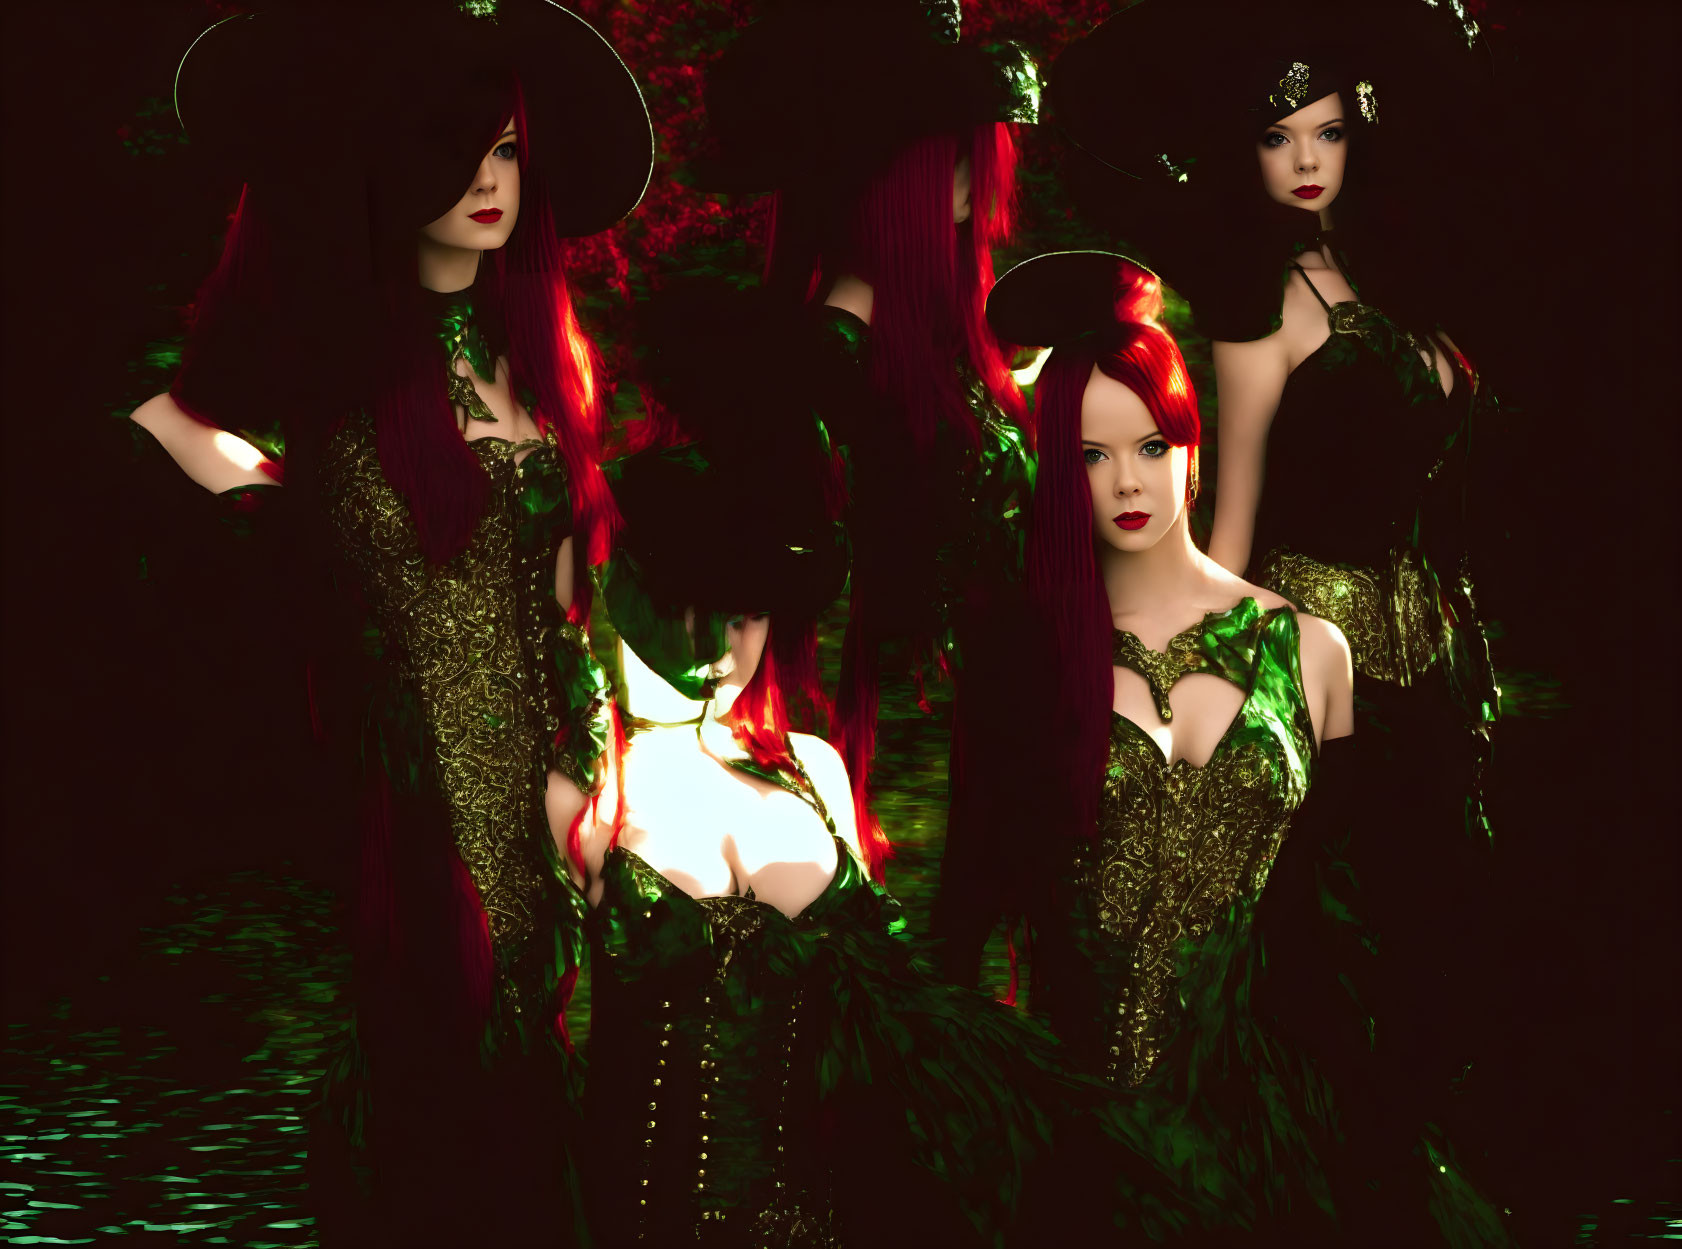 Four women in gothic attire with red hair in a dark forest.